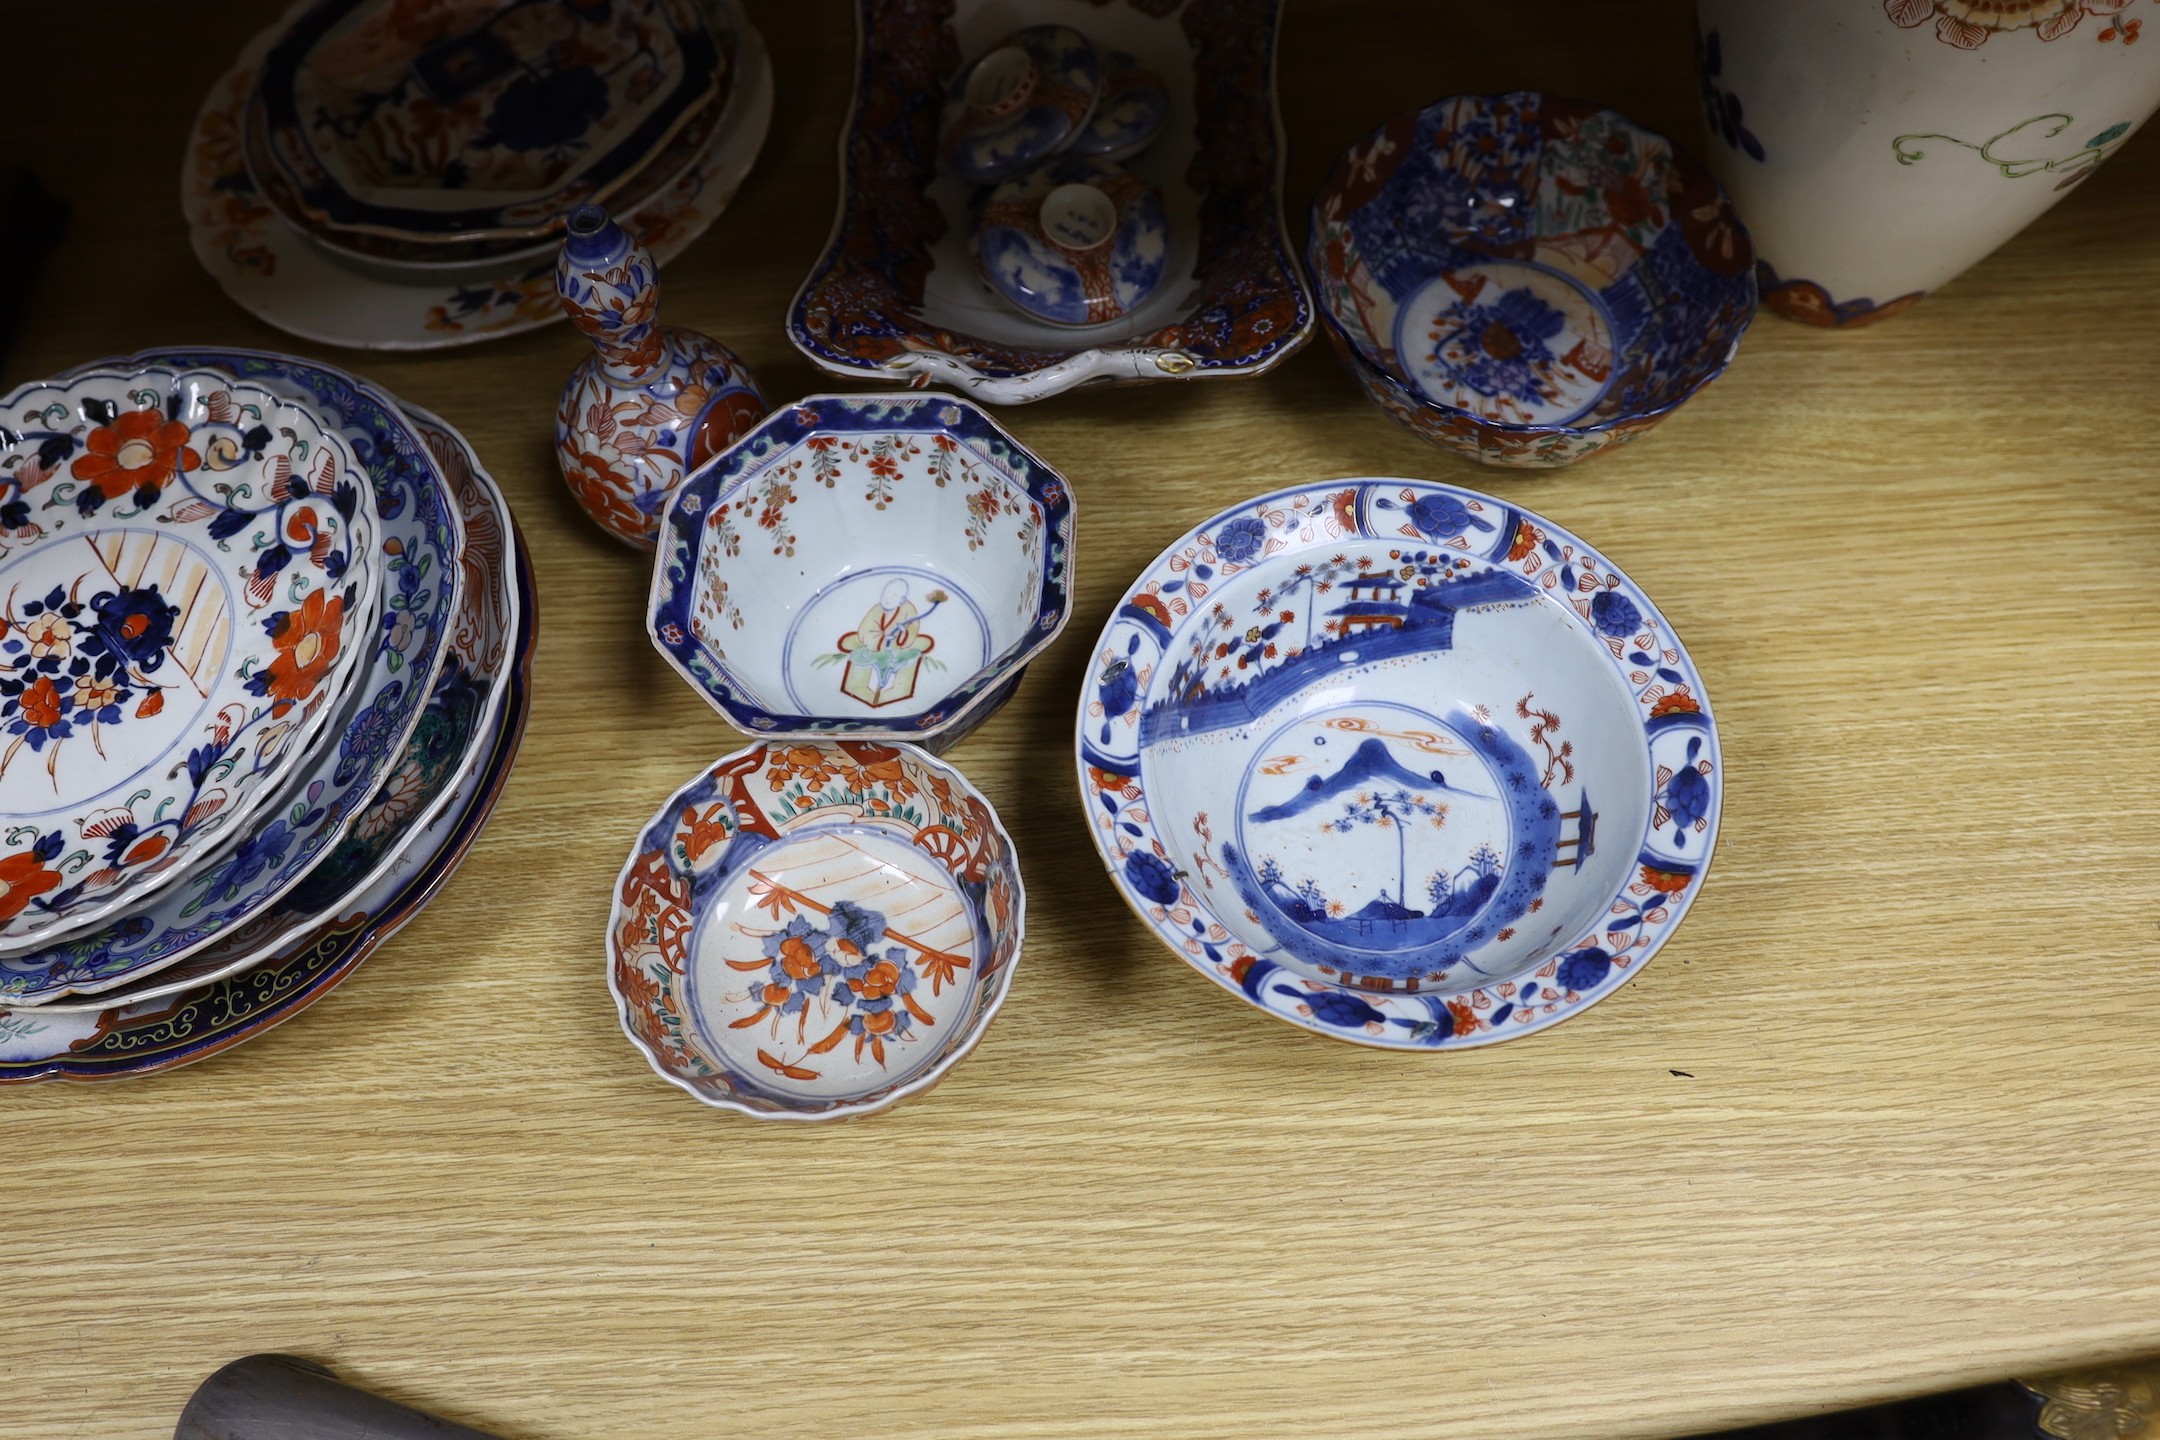 A Japanese Imari two handled vase, a Kangxi Imari bowl a/f and a collection of similar Japanese and continental ceramics